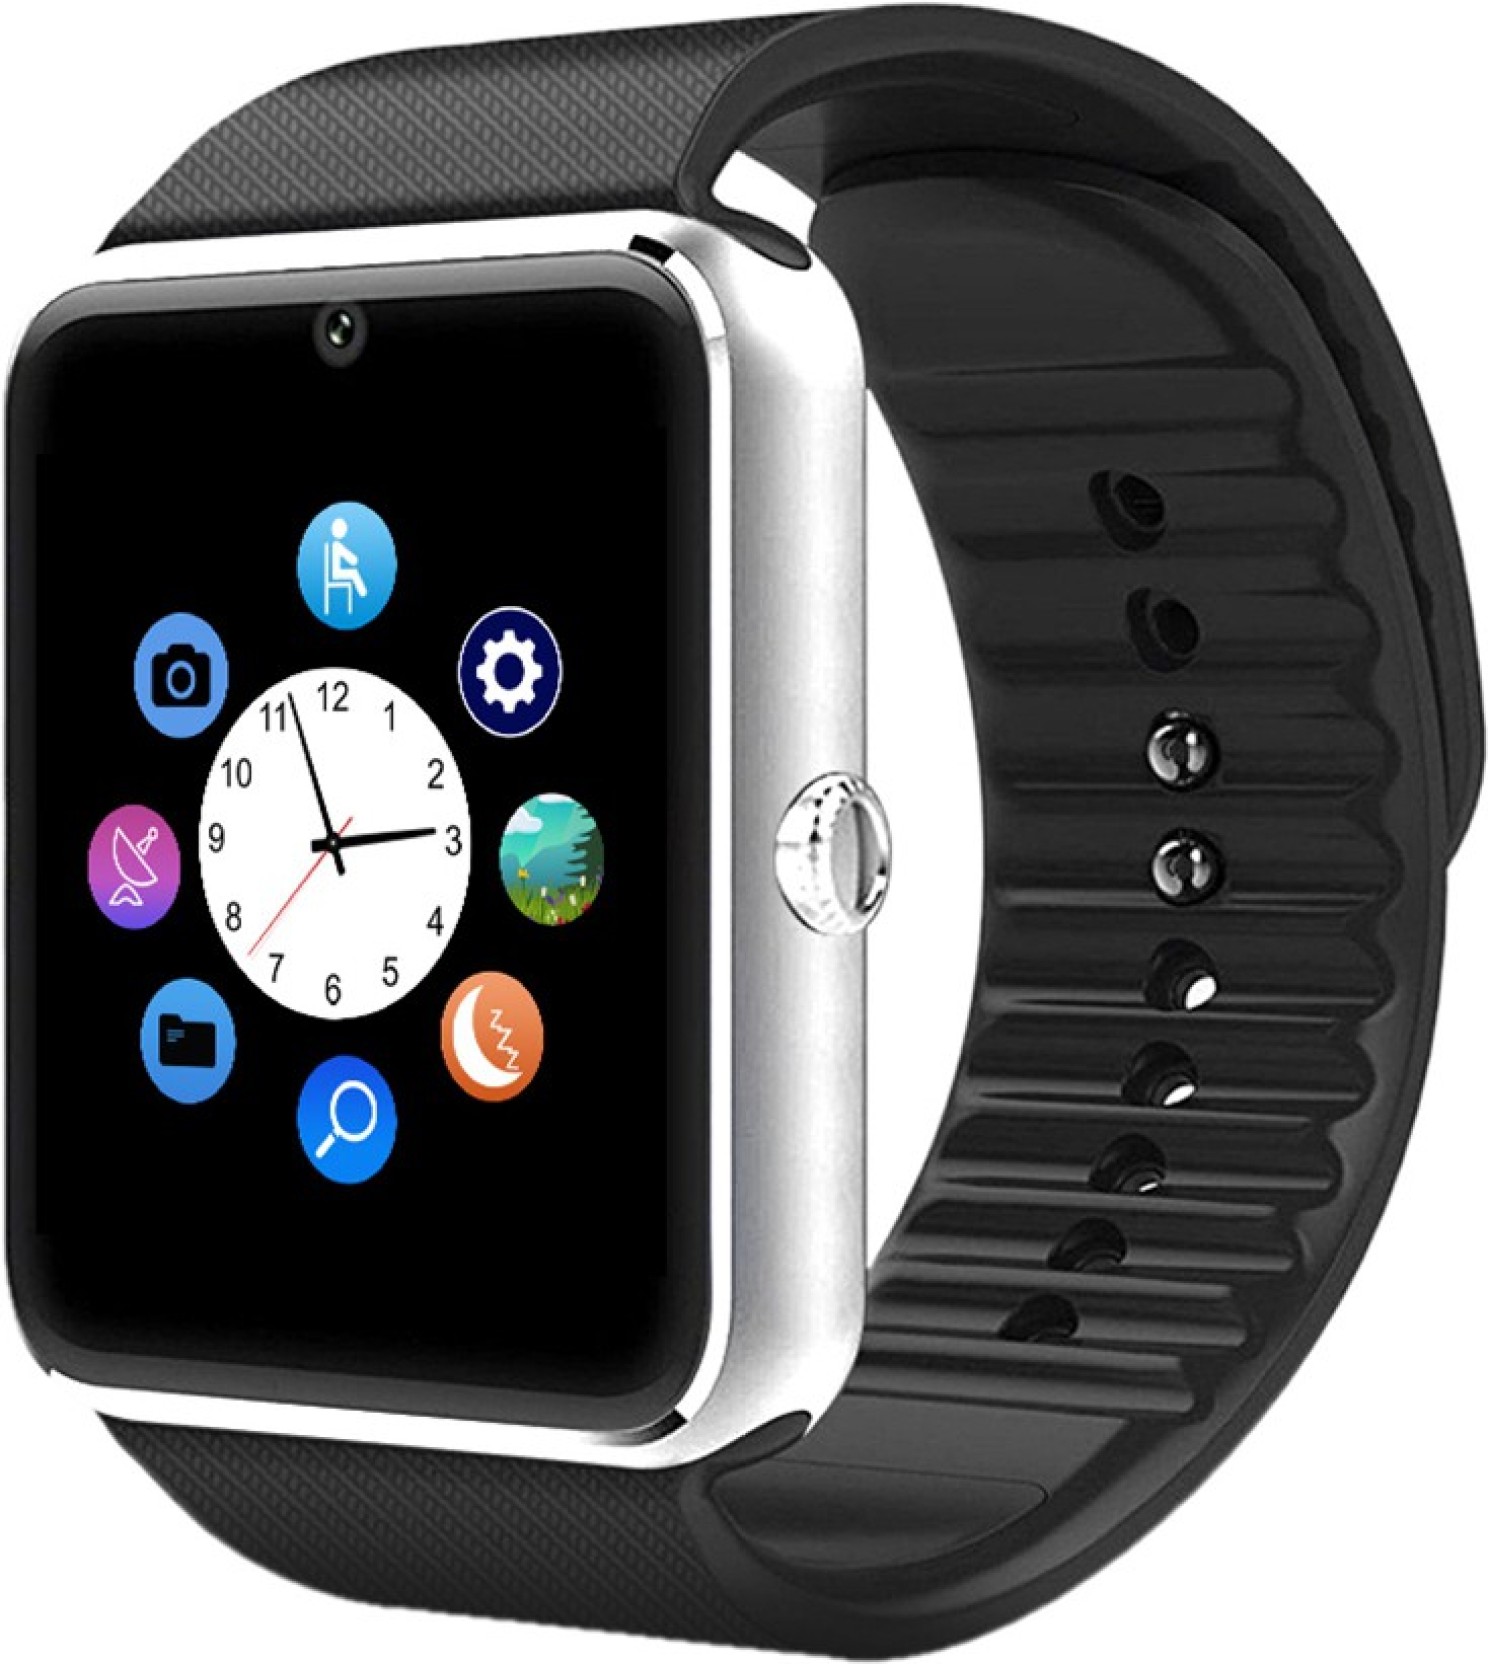 Смарт часы watch x. Часы смарт вотч 8. Часы смарт вотч gt08. Смарт-часы gt08 (черный). Smart watch Smart gt08.